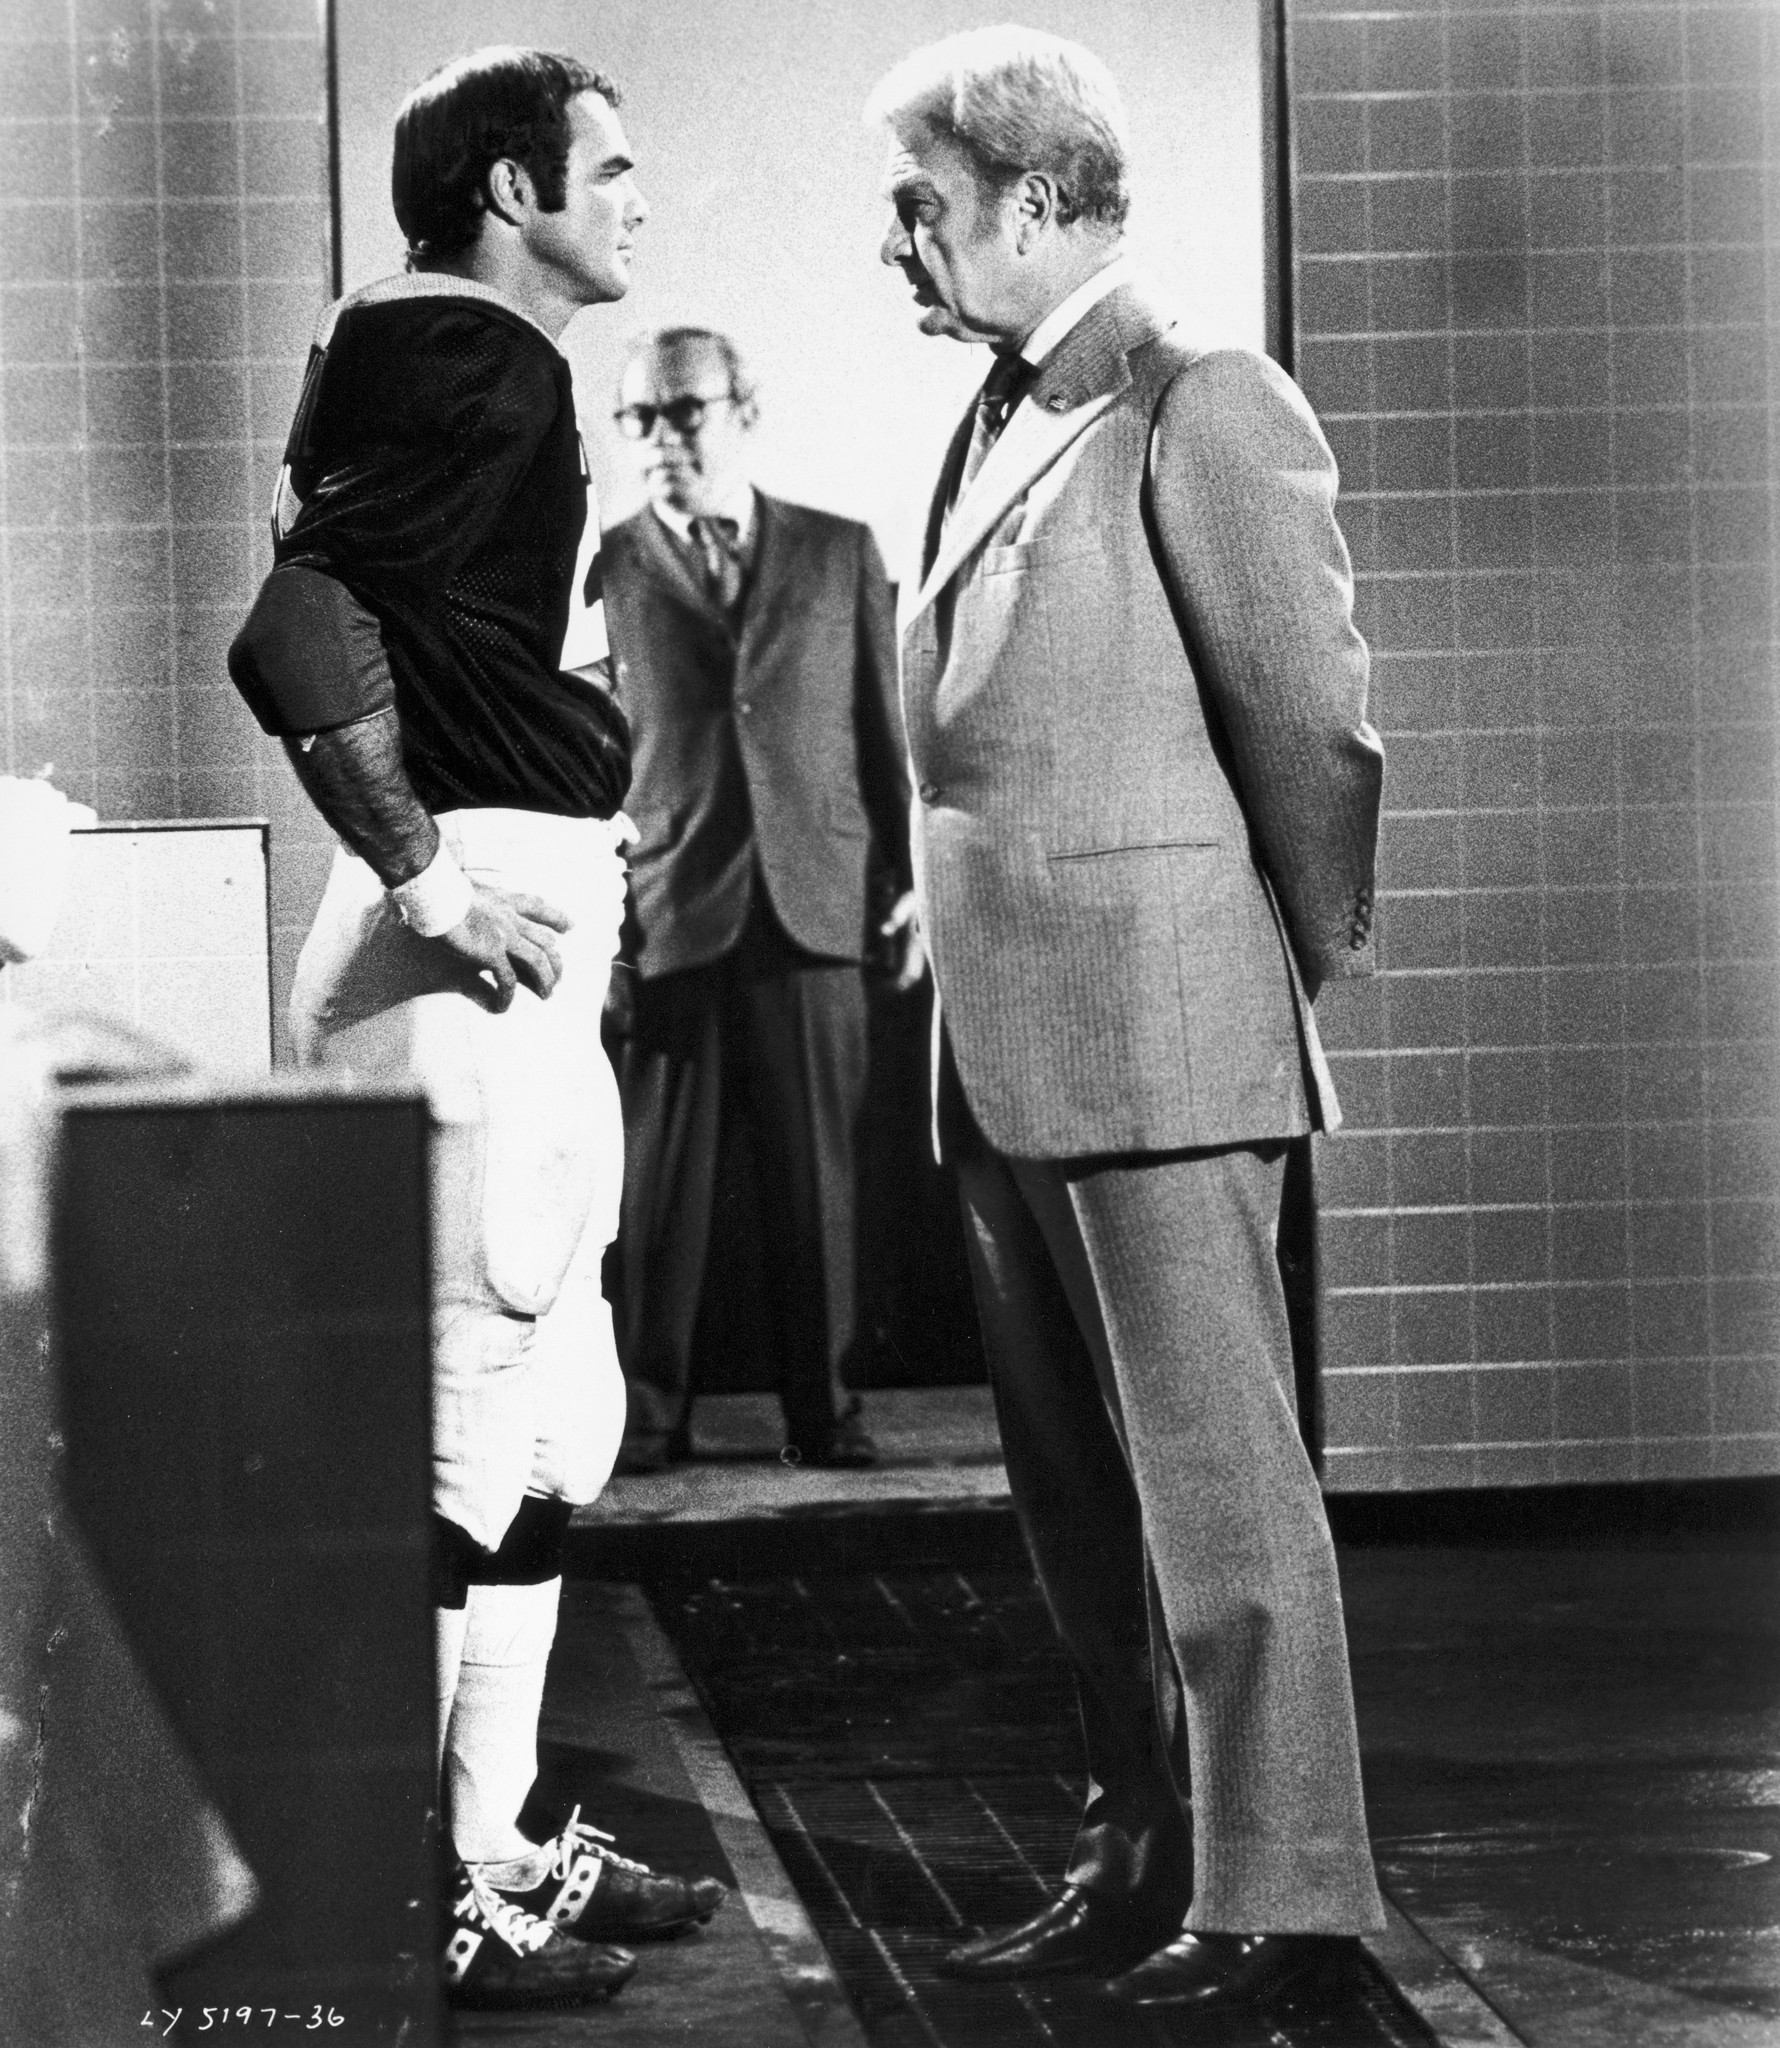 Still of Burt Reynolds and Eddie Albert in The Longest Yard (1974)